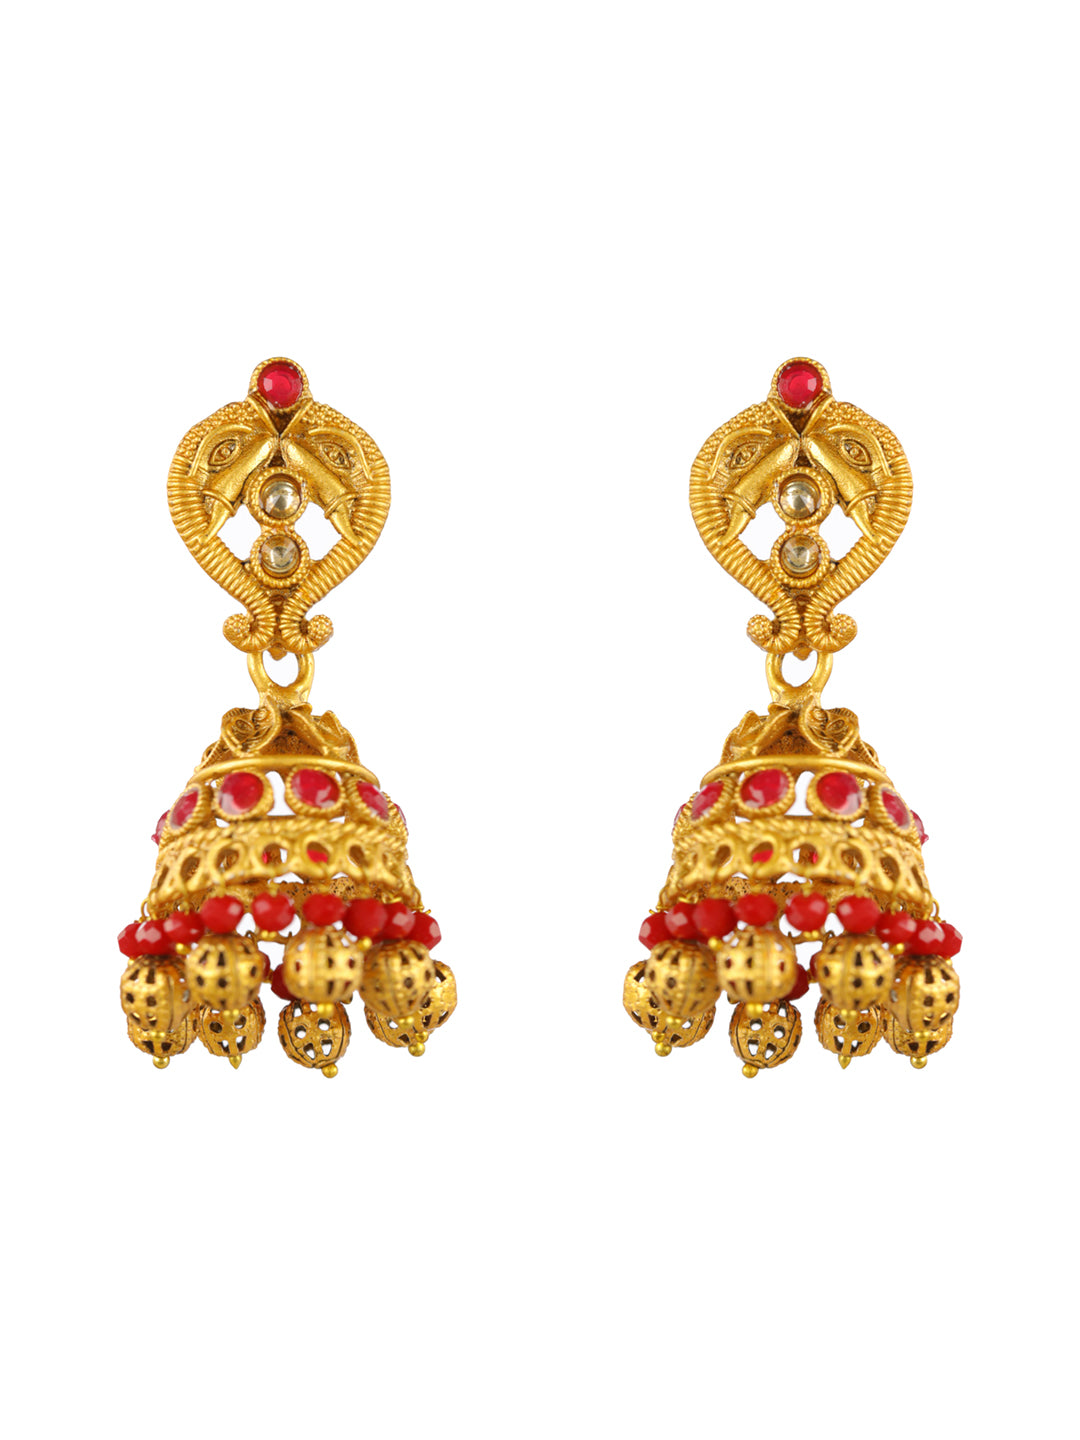 Priyaasi Studded Red Floral Kundan Gold-Plated Jewellery Set